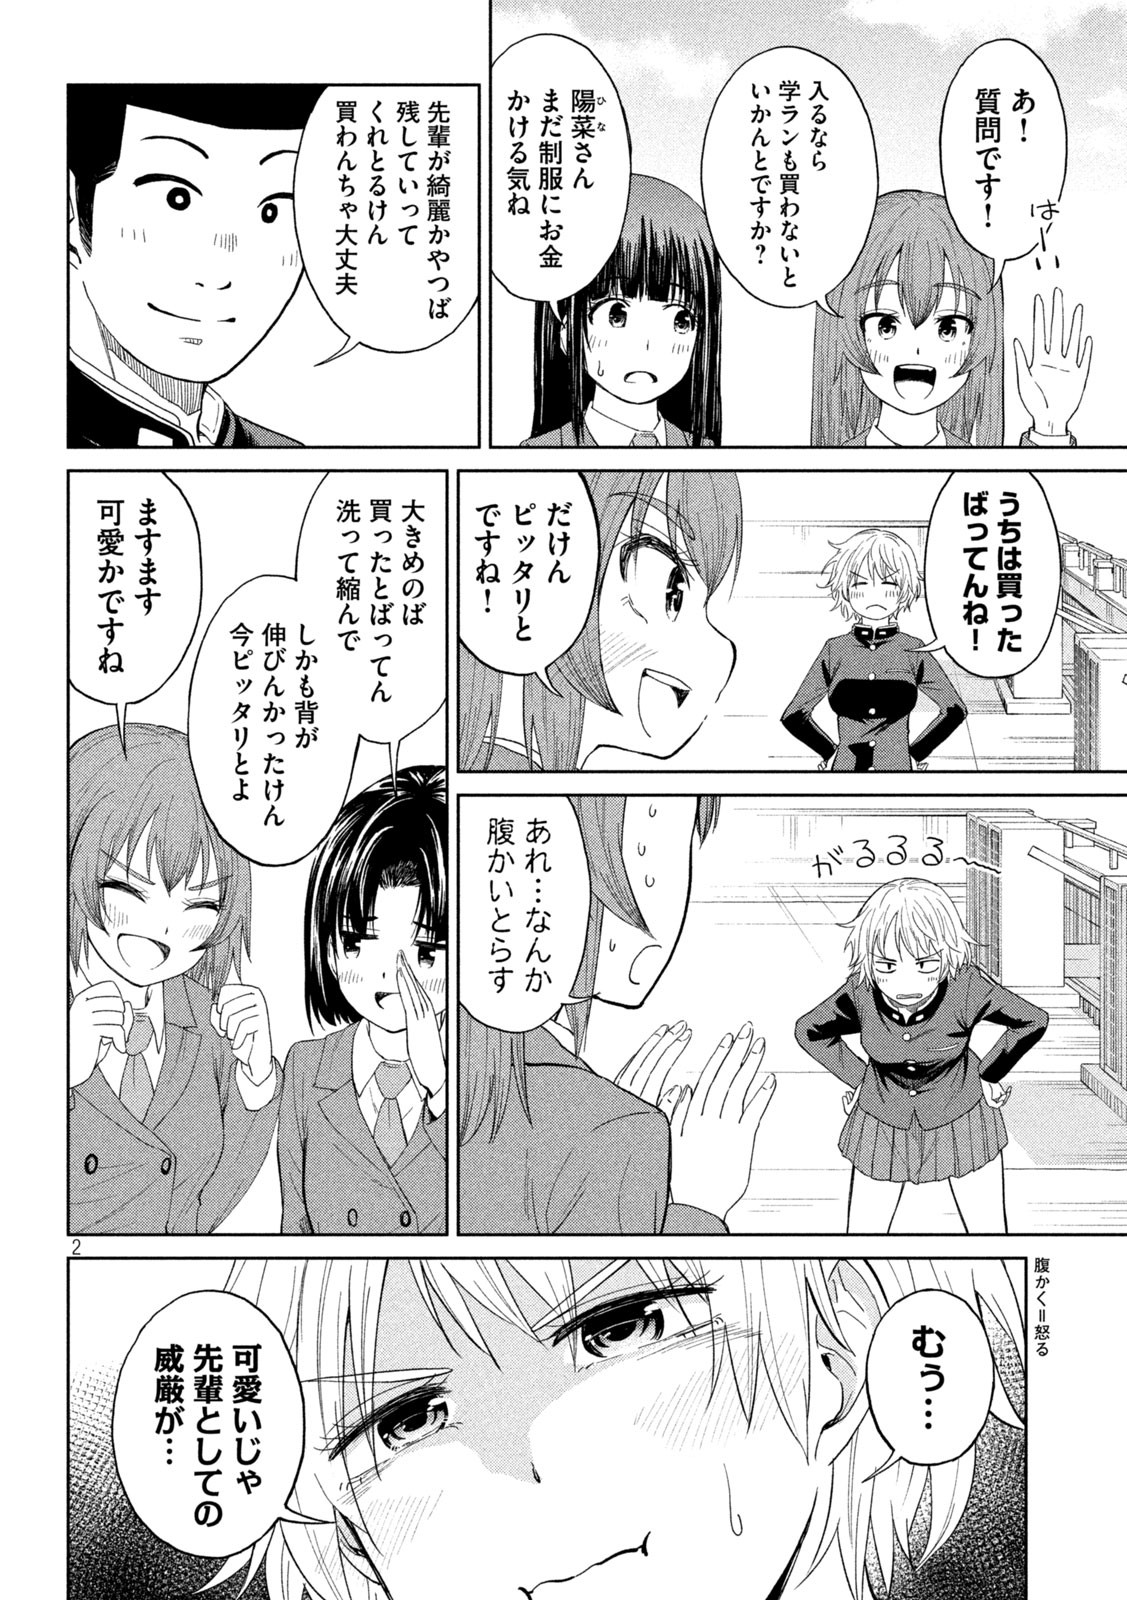 Koharu haru! - Chapter 96 - Page 2